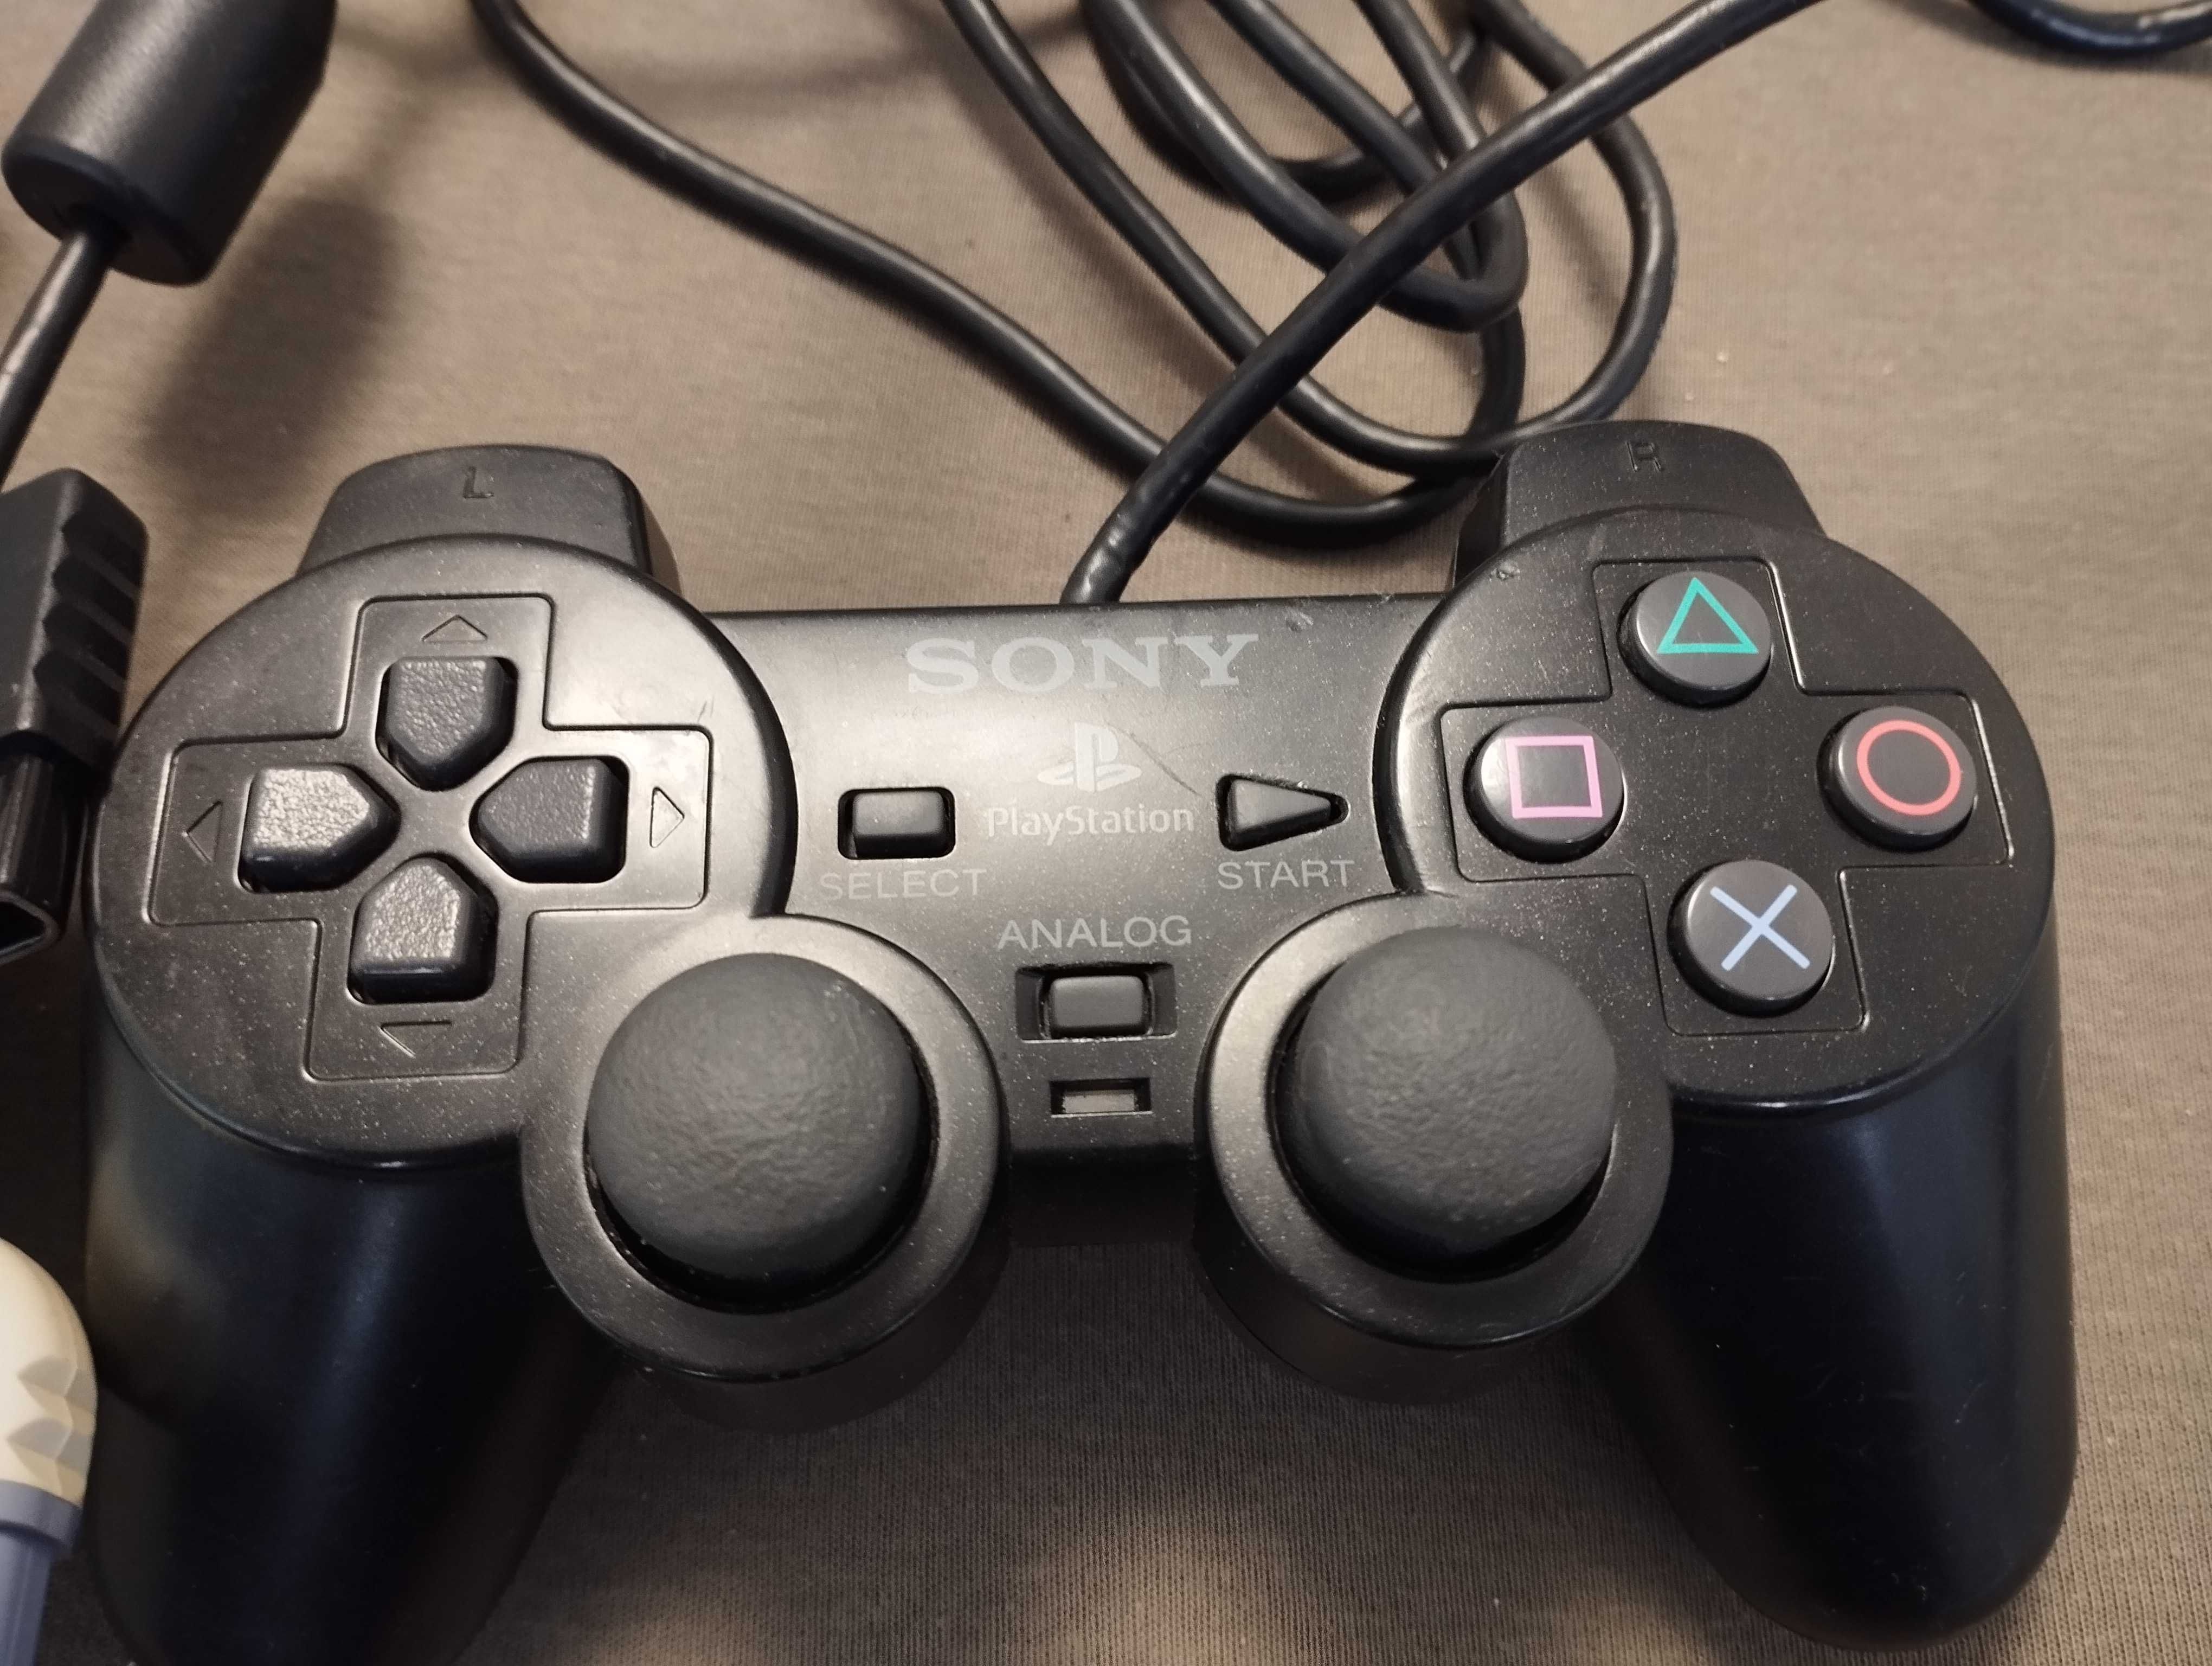 Sony Playstation 1 2 Dual Analog Геймпад  джойстик пульт